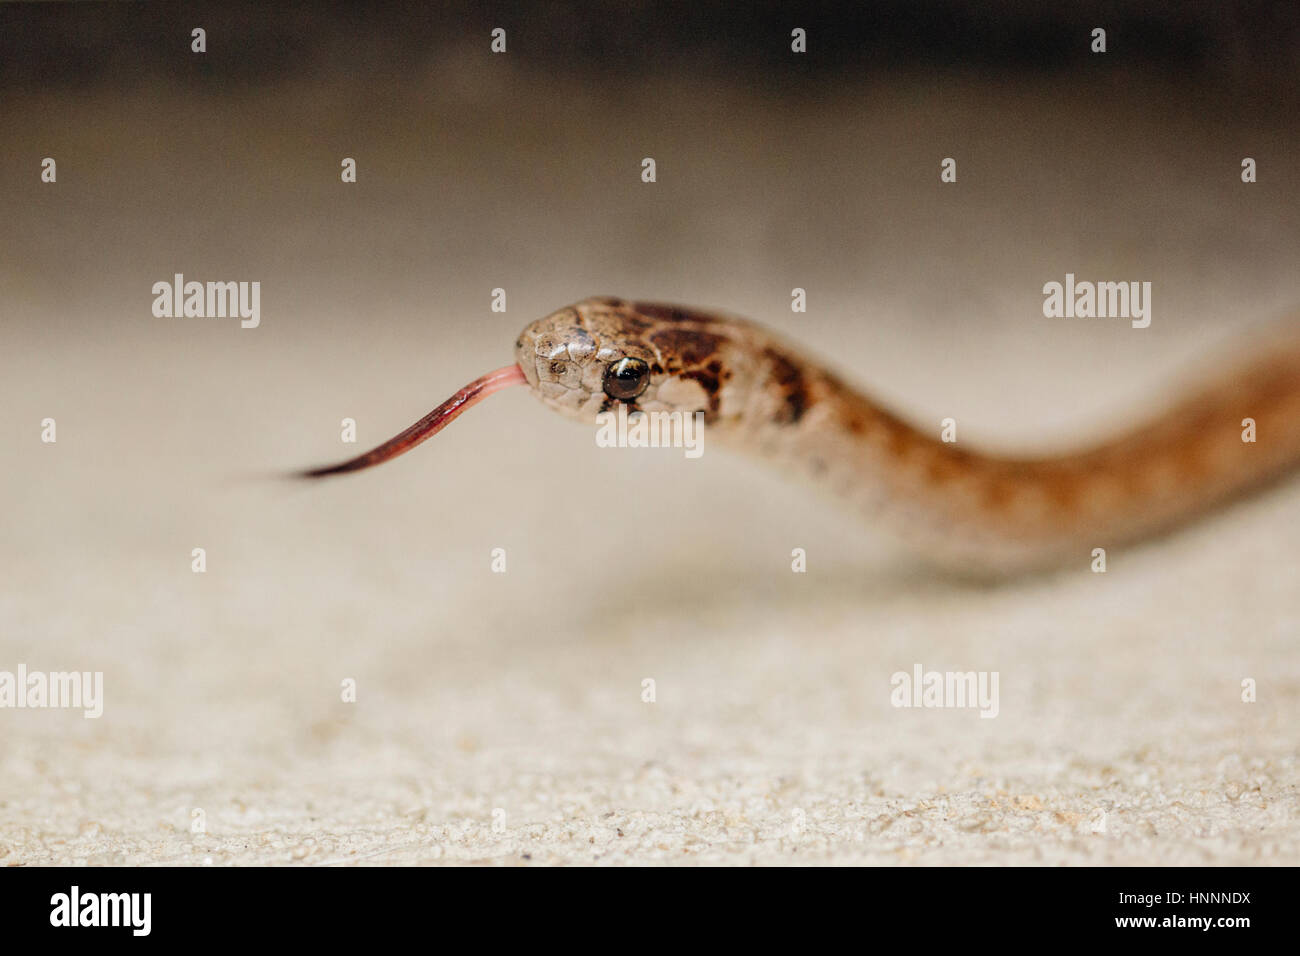 Close-up of brown snake flicking tongue Stock Photo